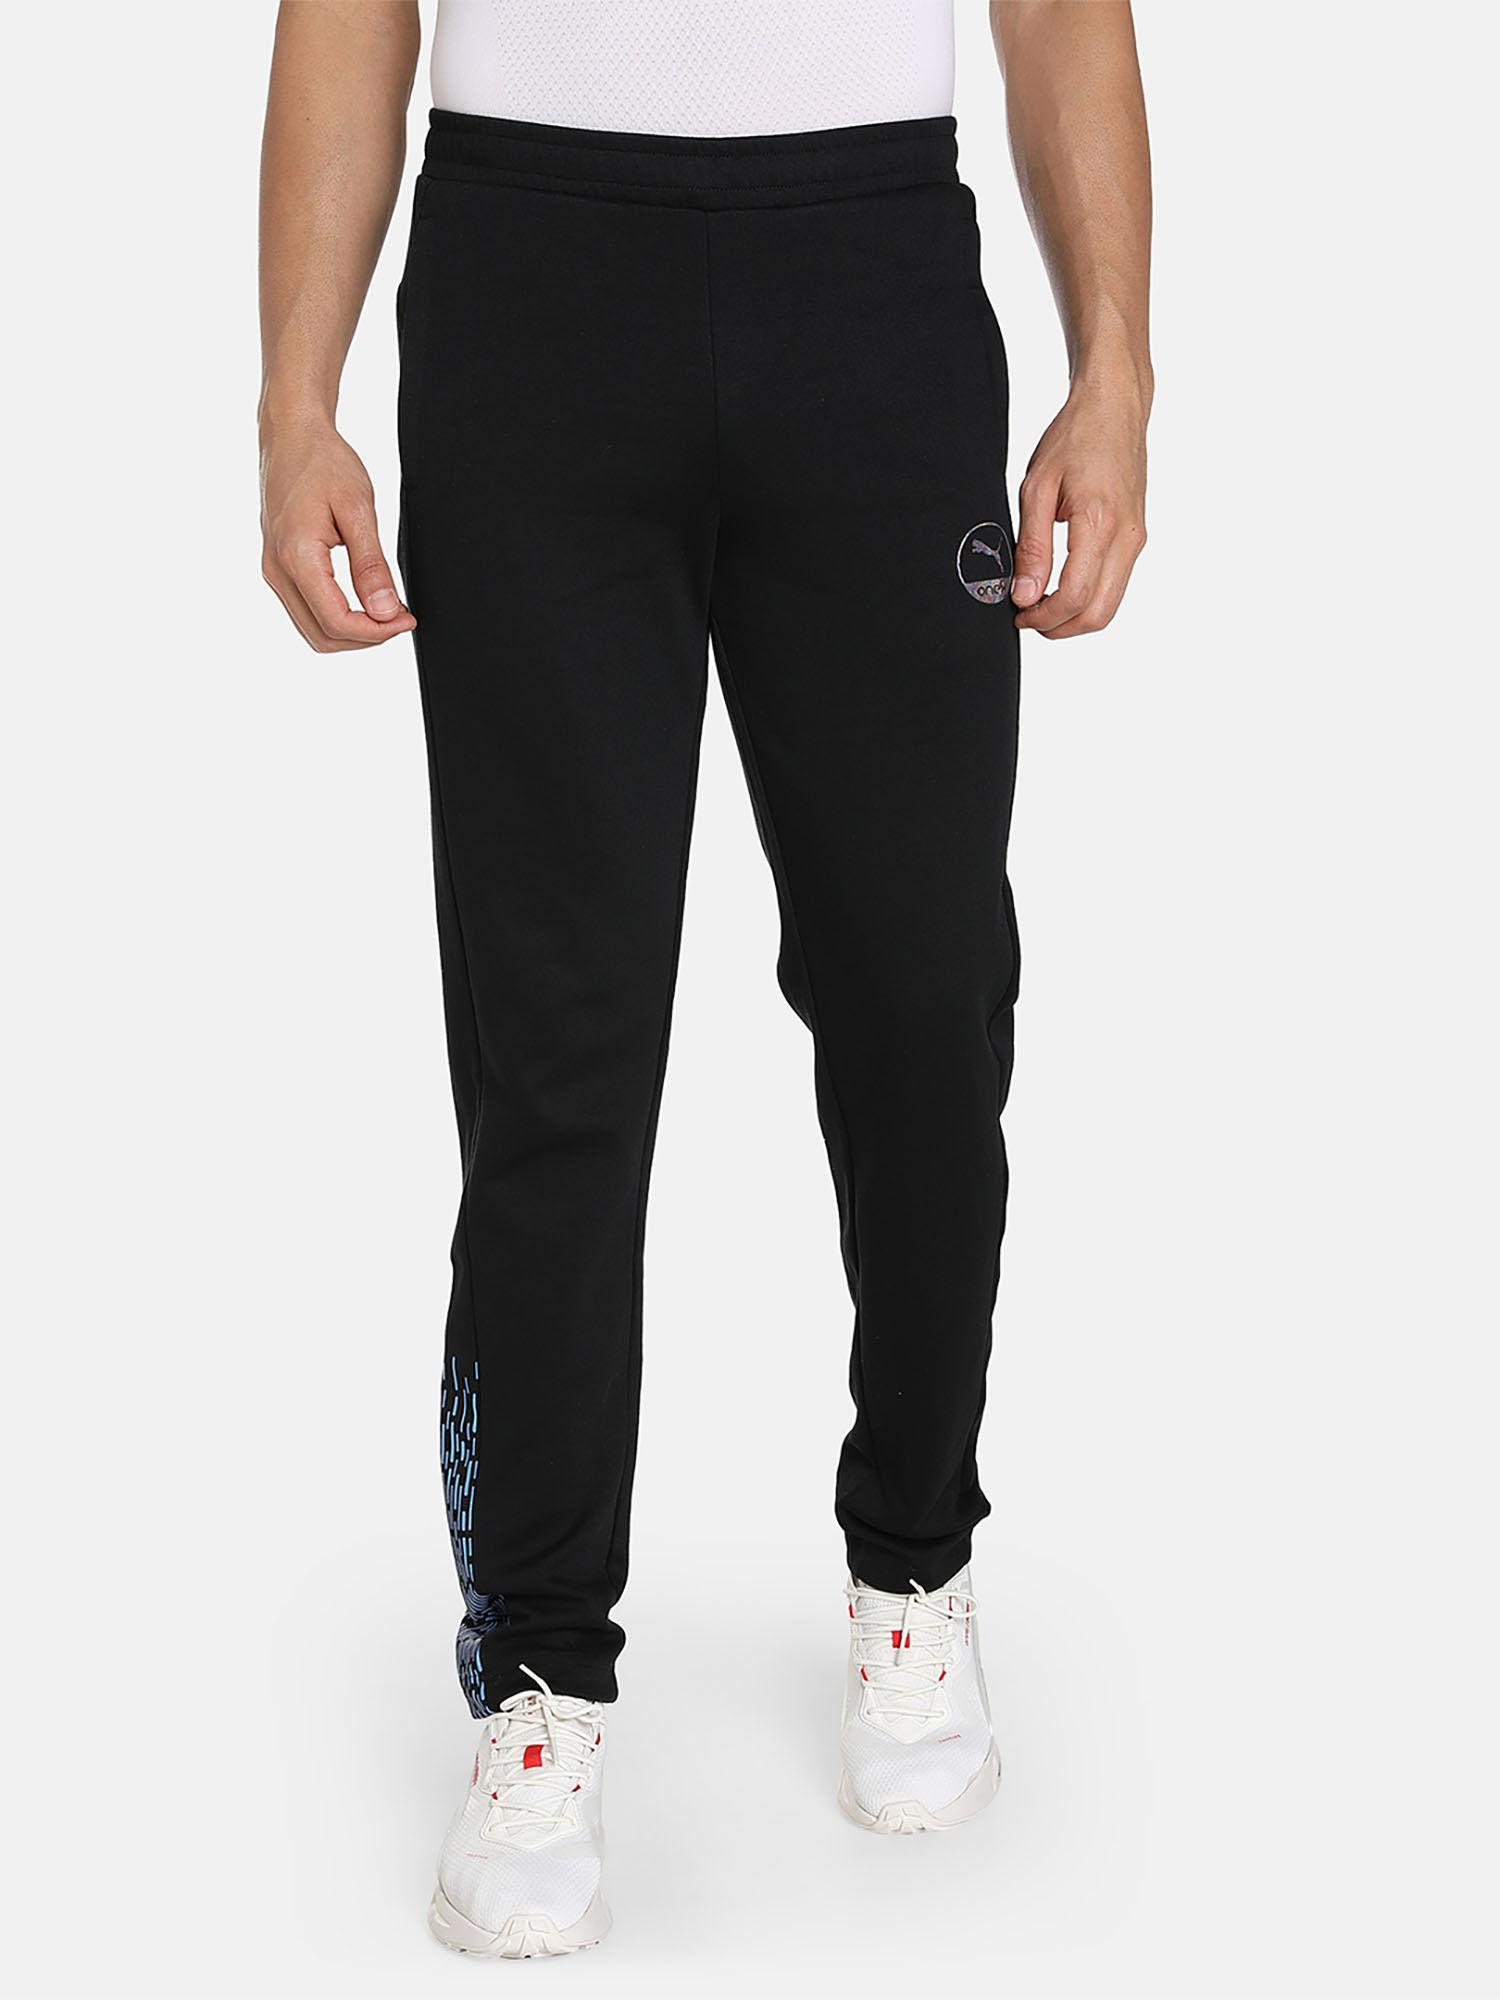 x-one8-elevated-men's-black-pants